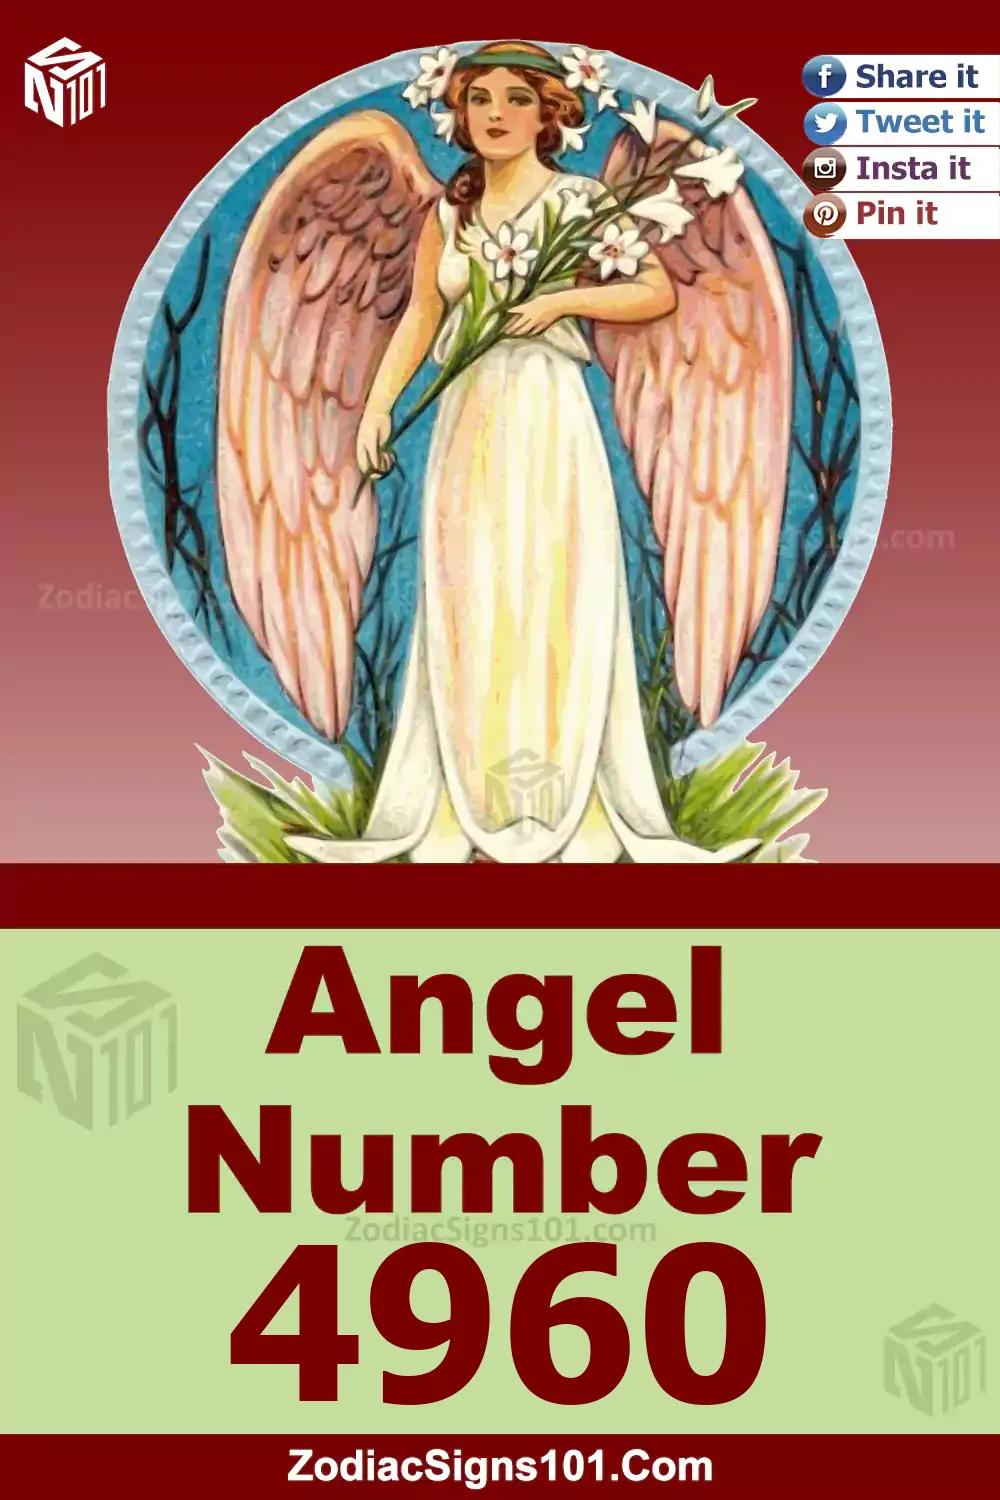 4960-Angel-Number-Meaning.jpg